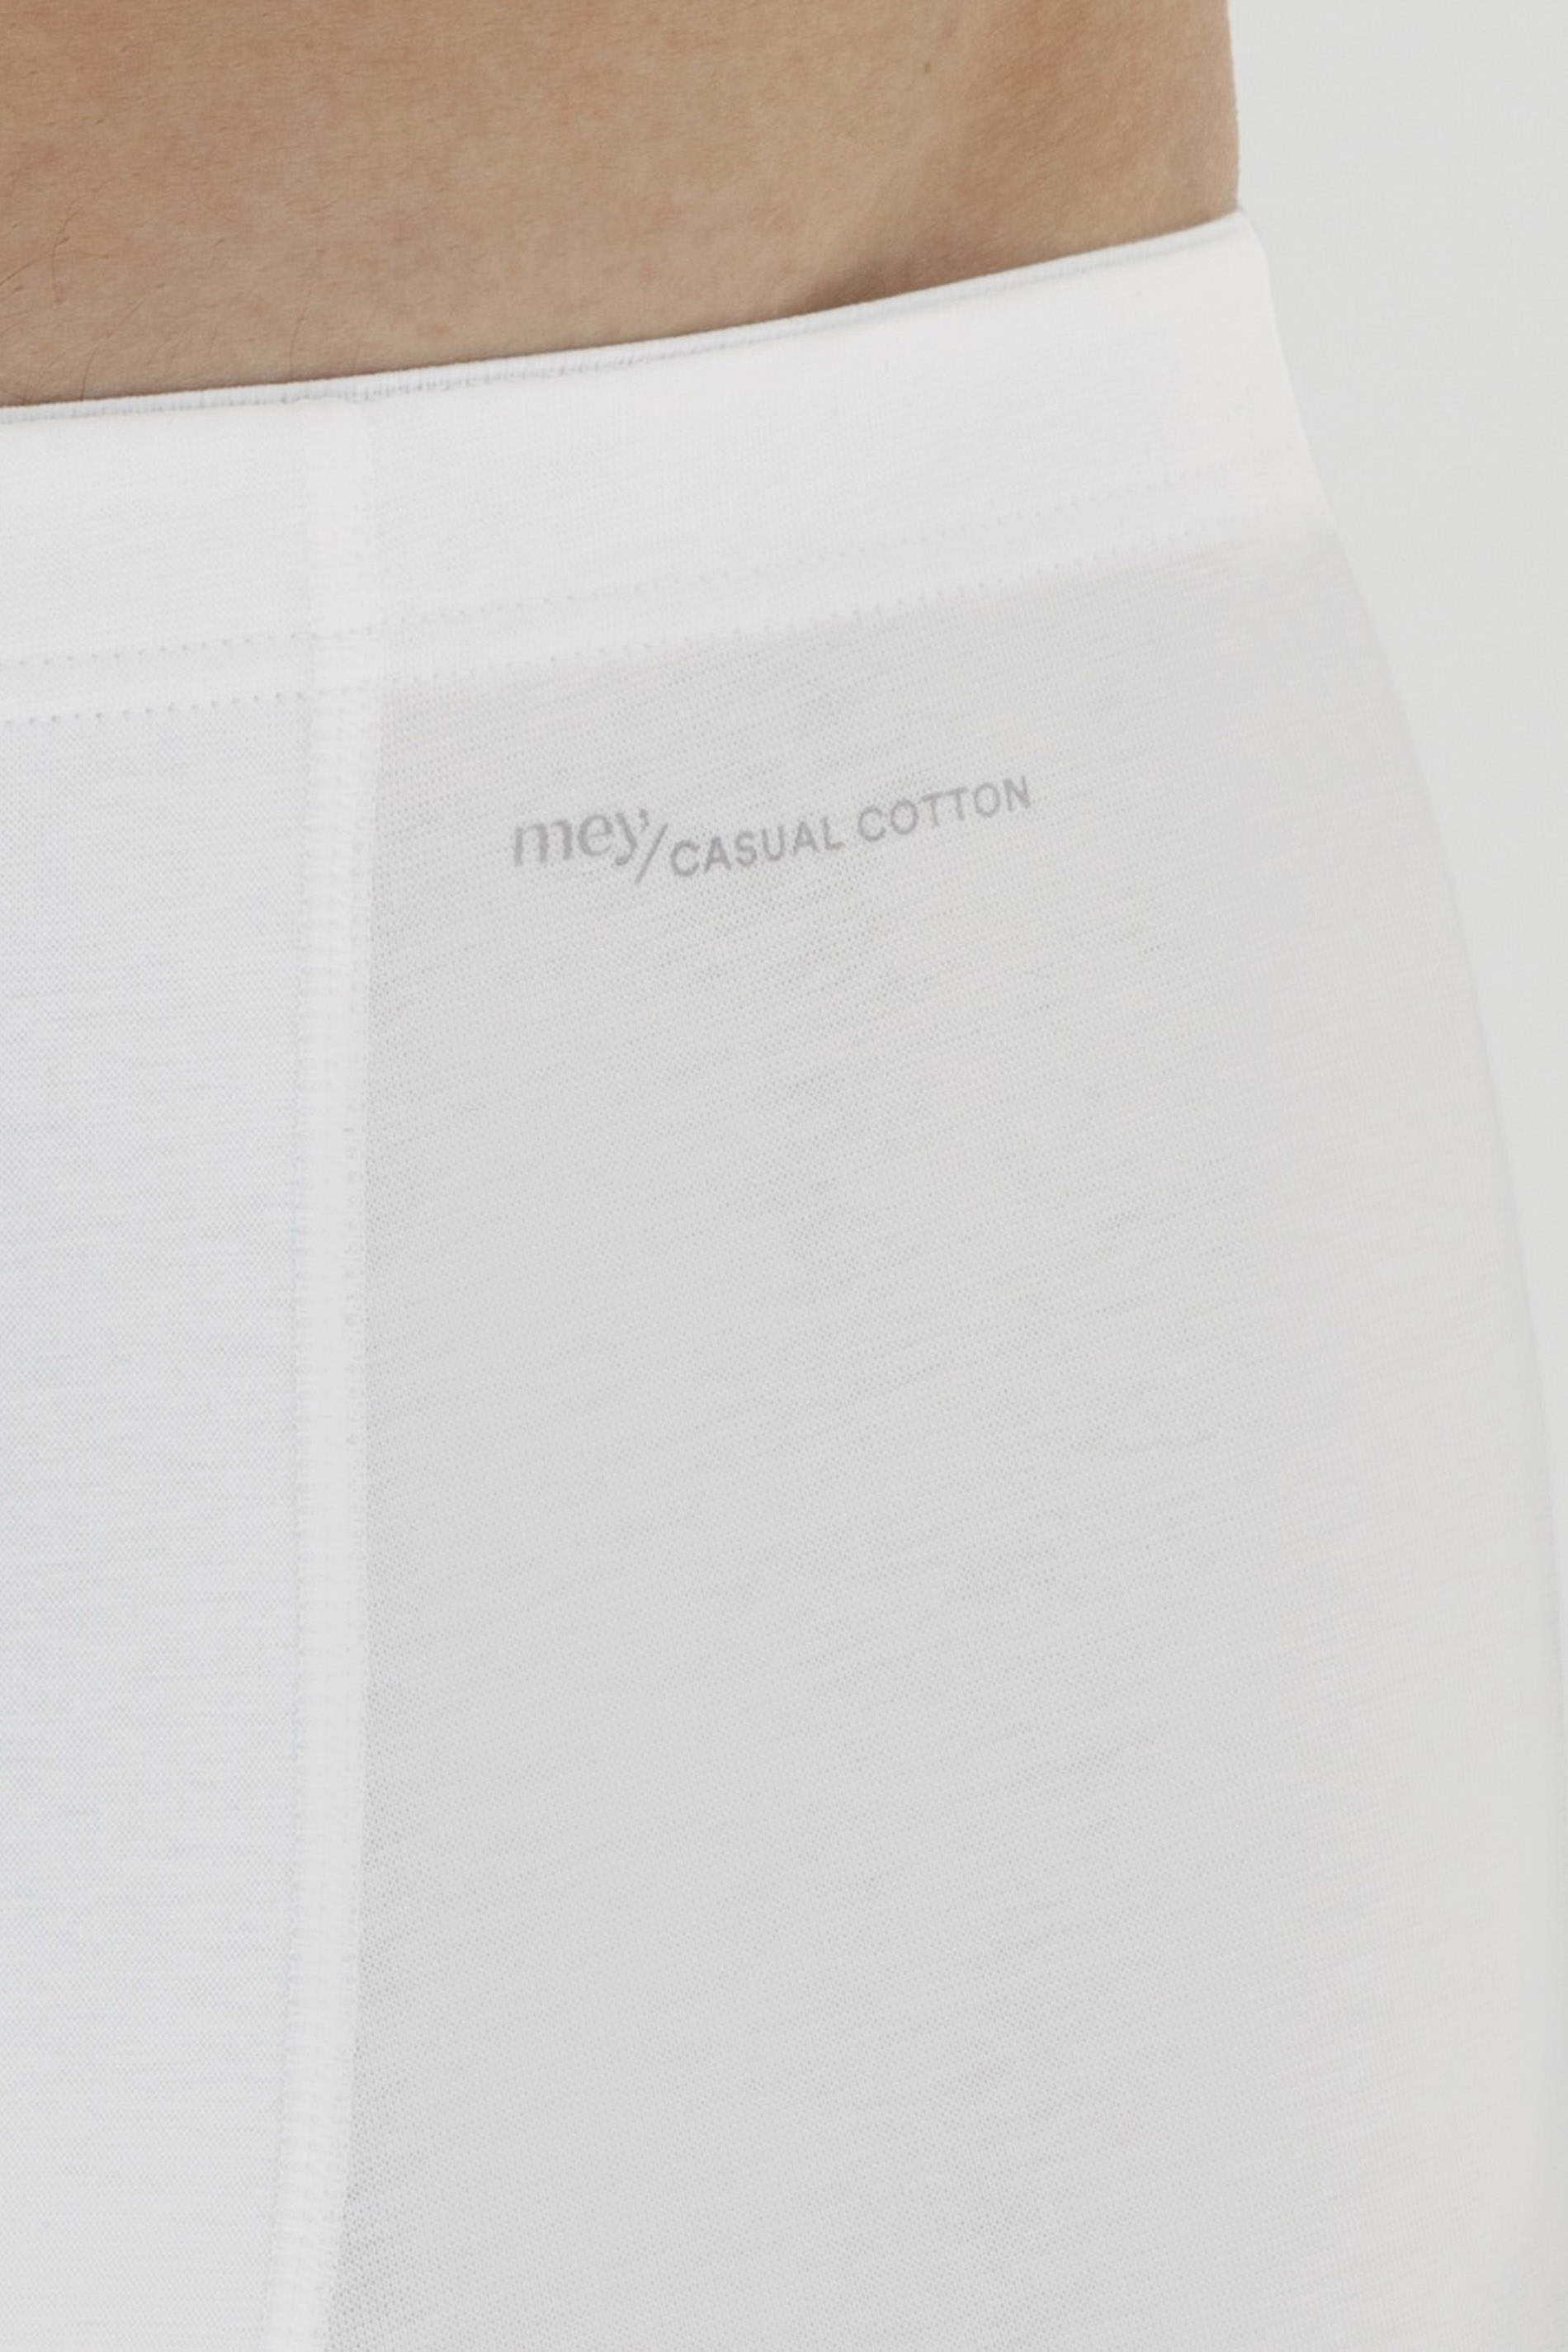 Shorty Weiss Serie Casual Cotton Detailansicht 01 | mey®